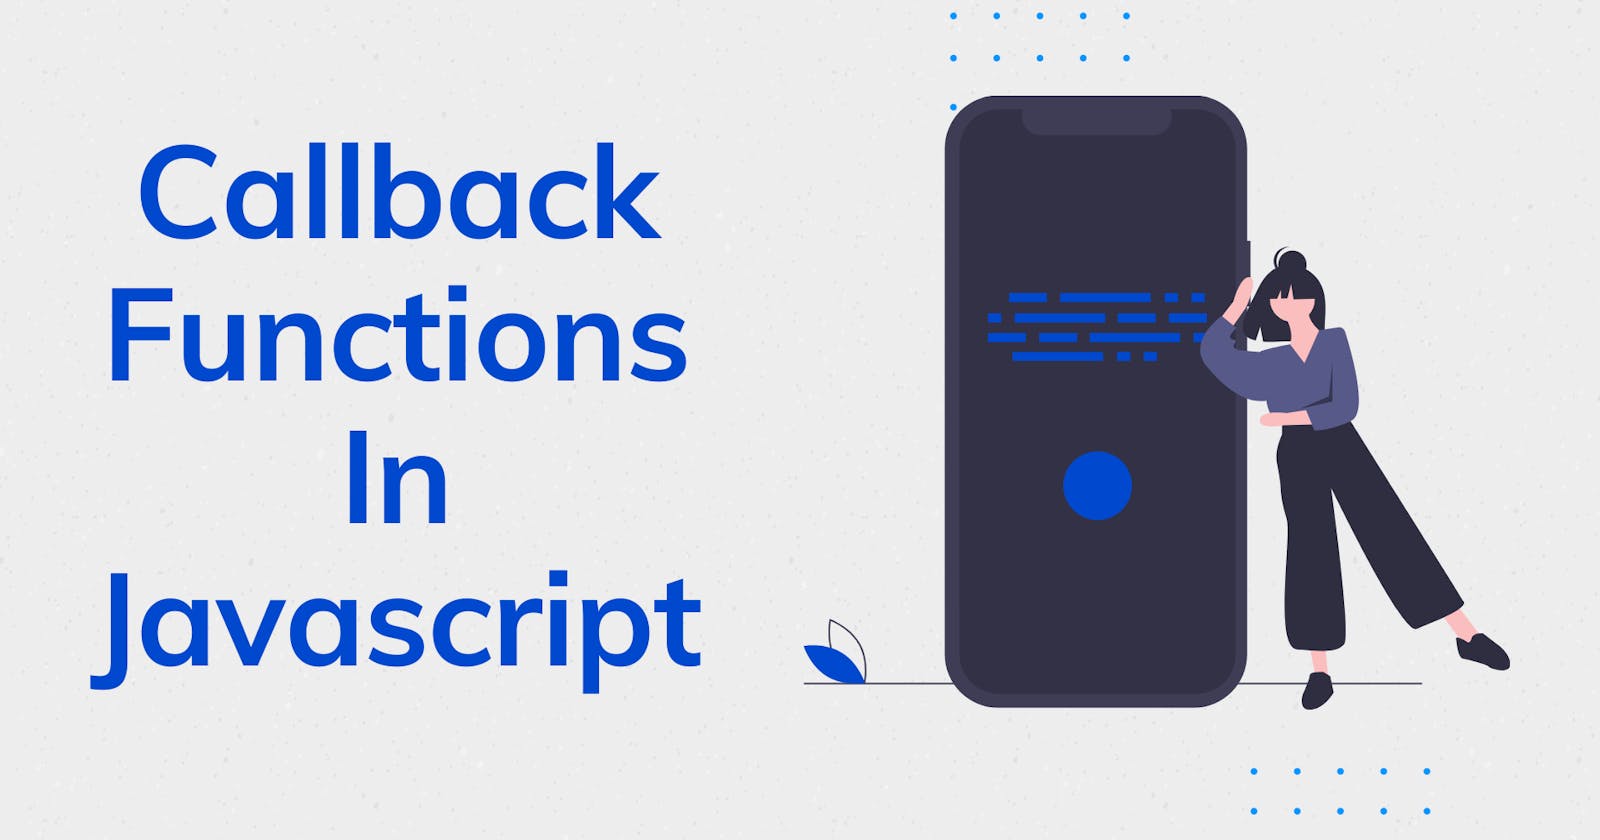 Callback Functions In Javascript